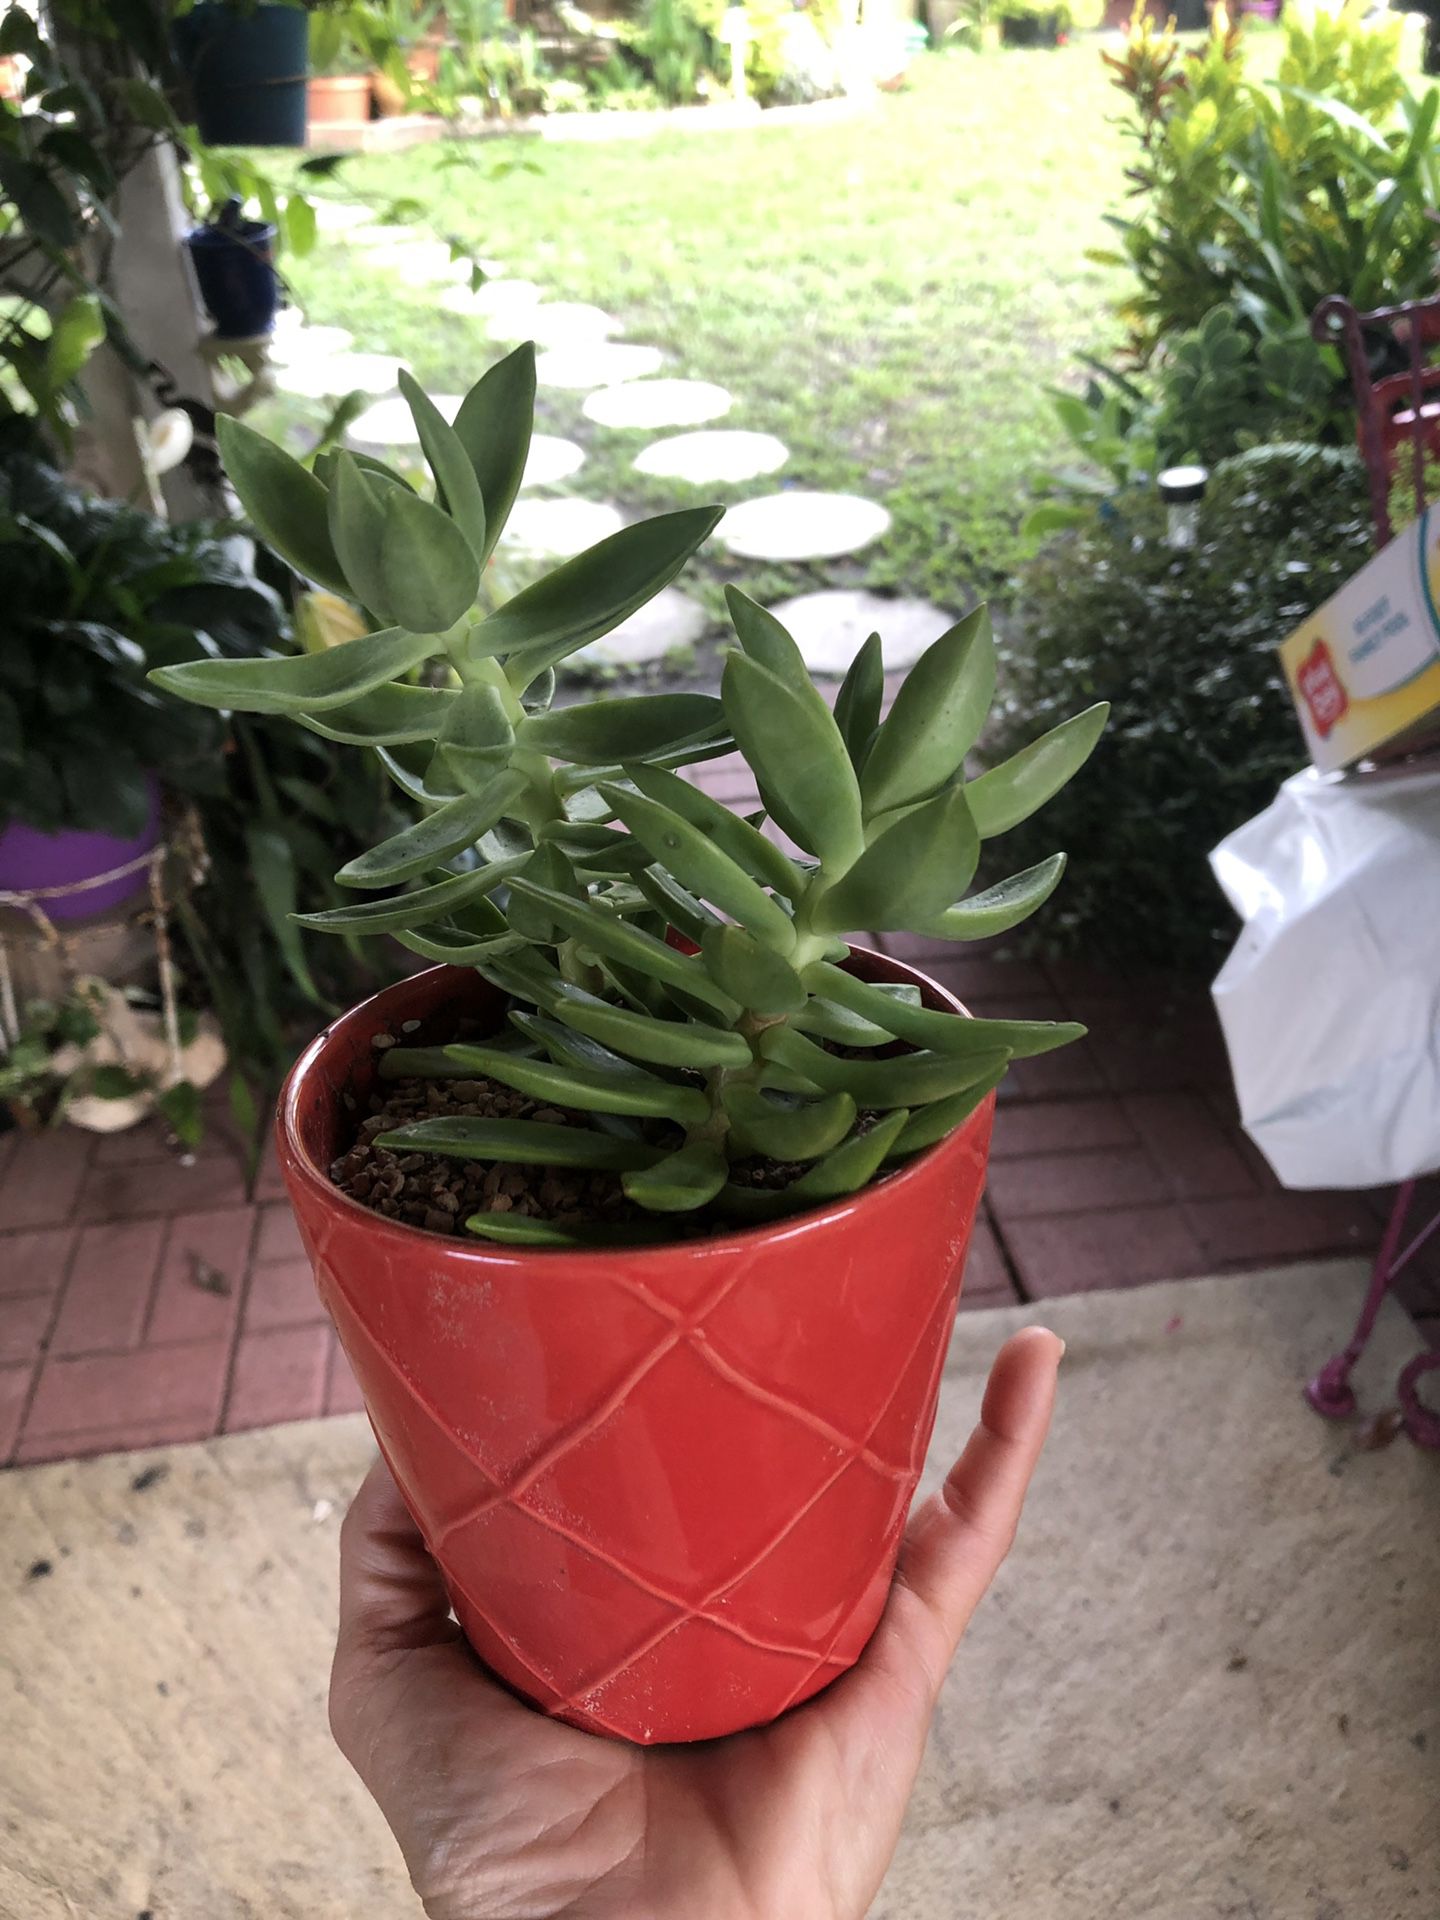 Succulent or bromeliad